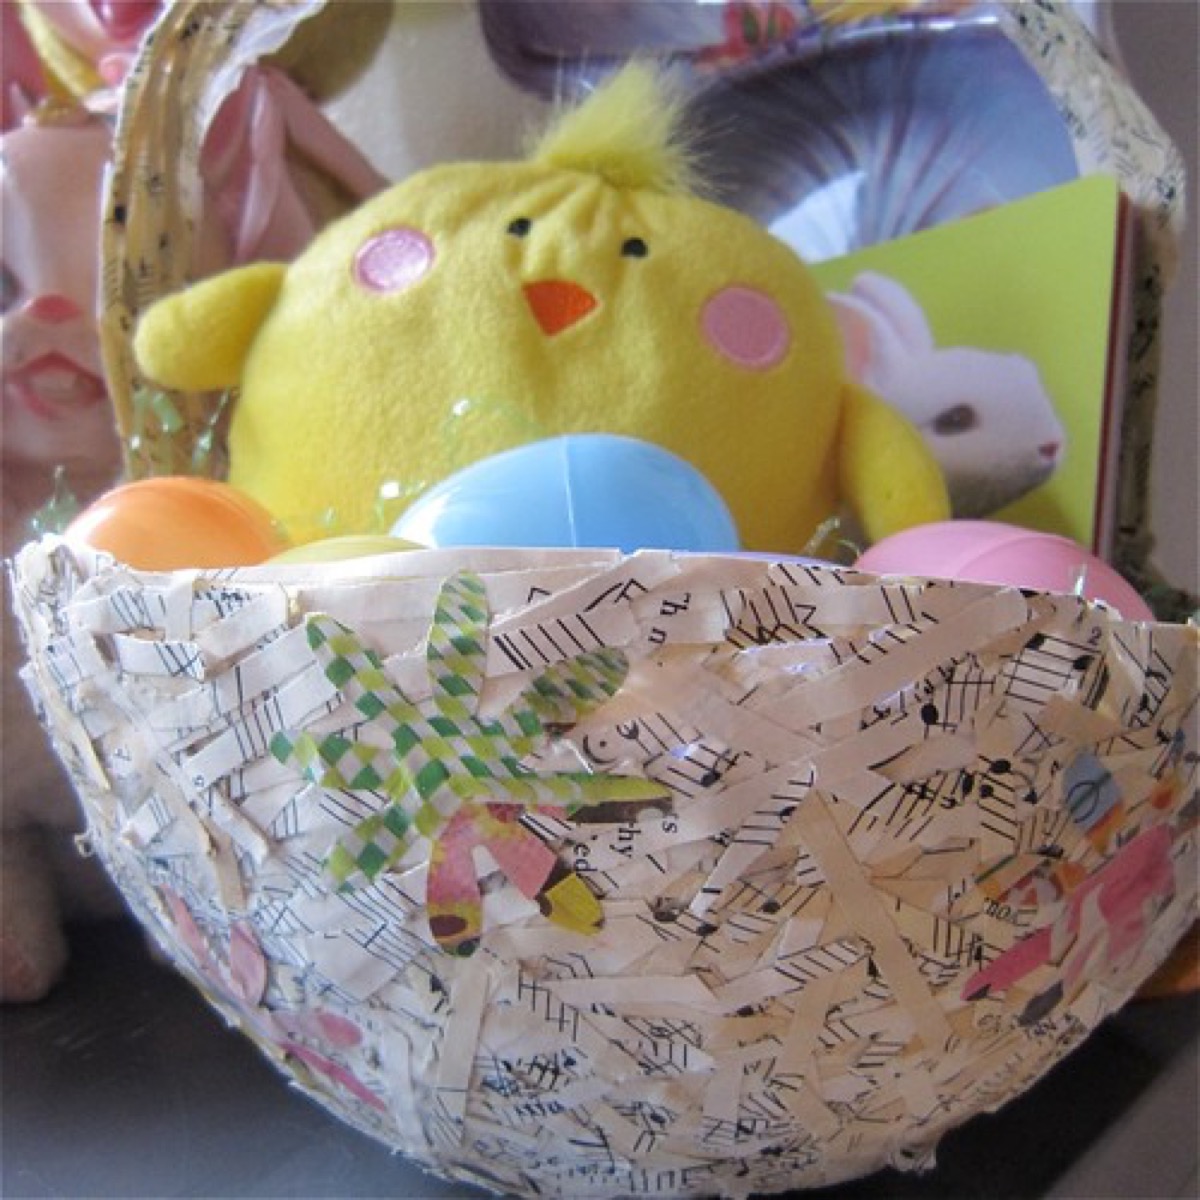 Recycled Easter basket diy